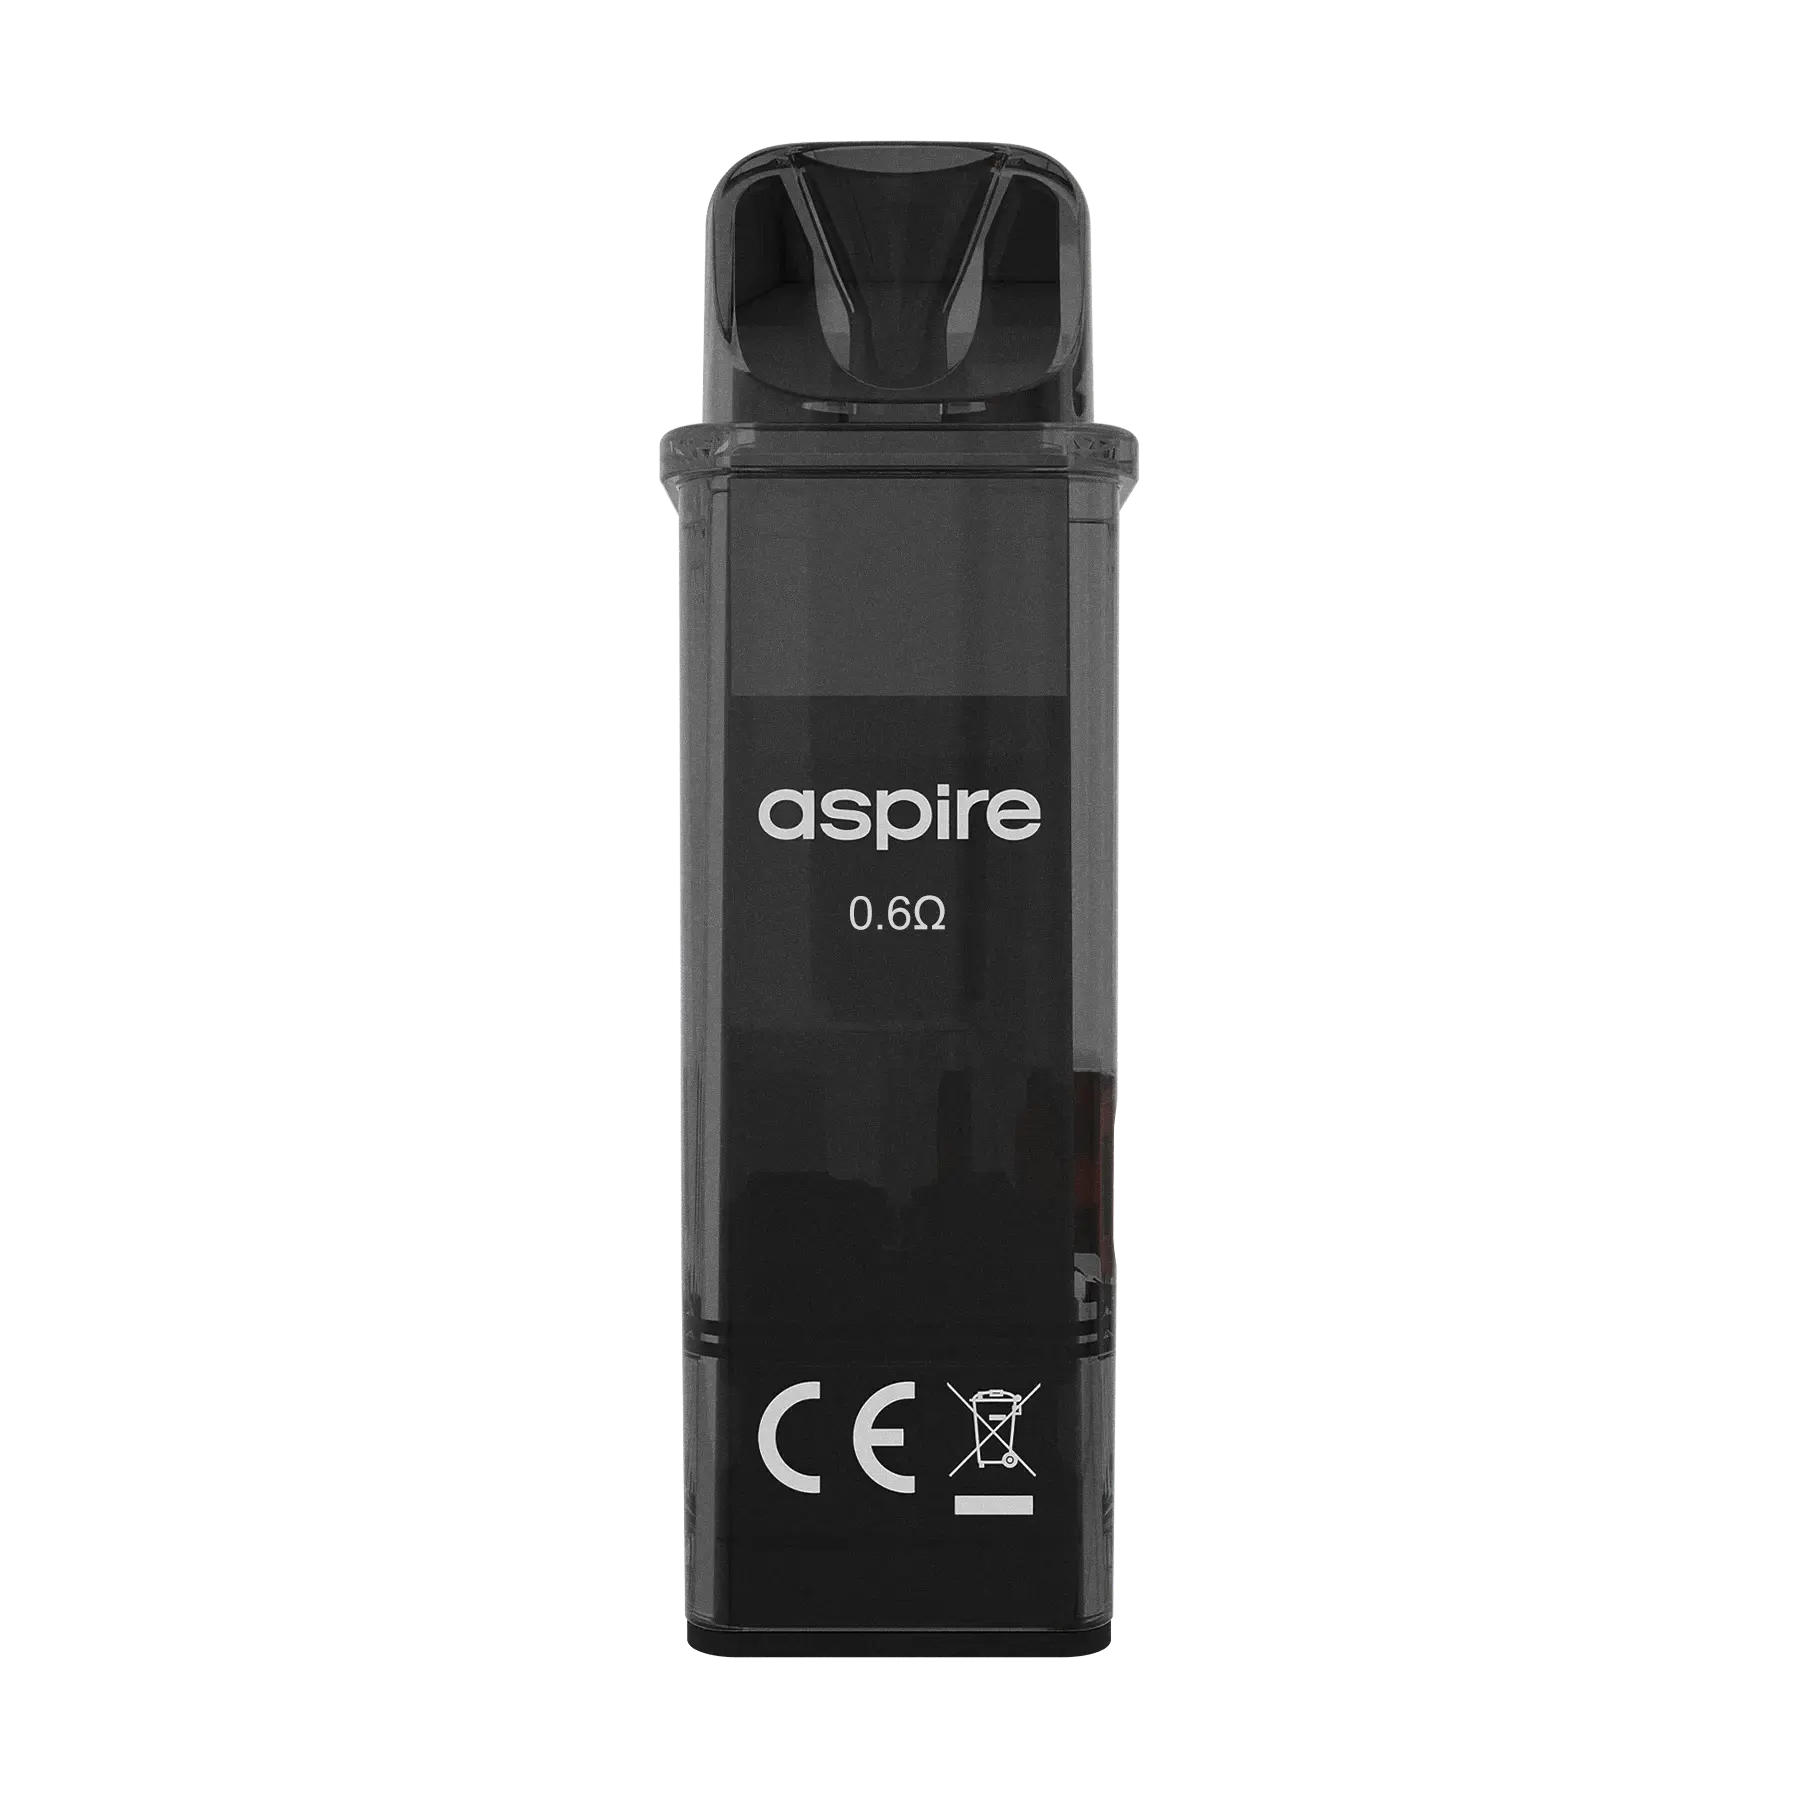 Aspire UK GoteK X Pro Replacement 0.6 ohm Pod - 2 Pack - XL